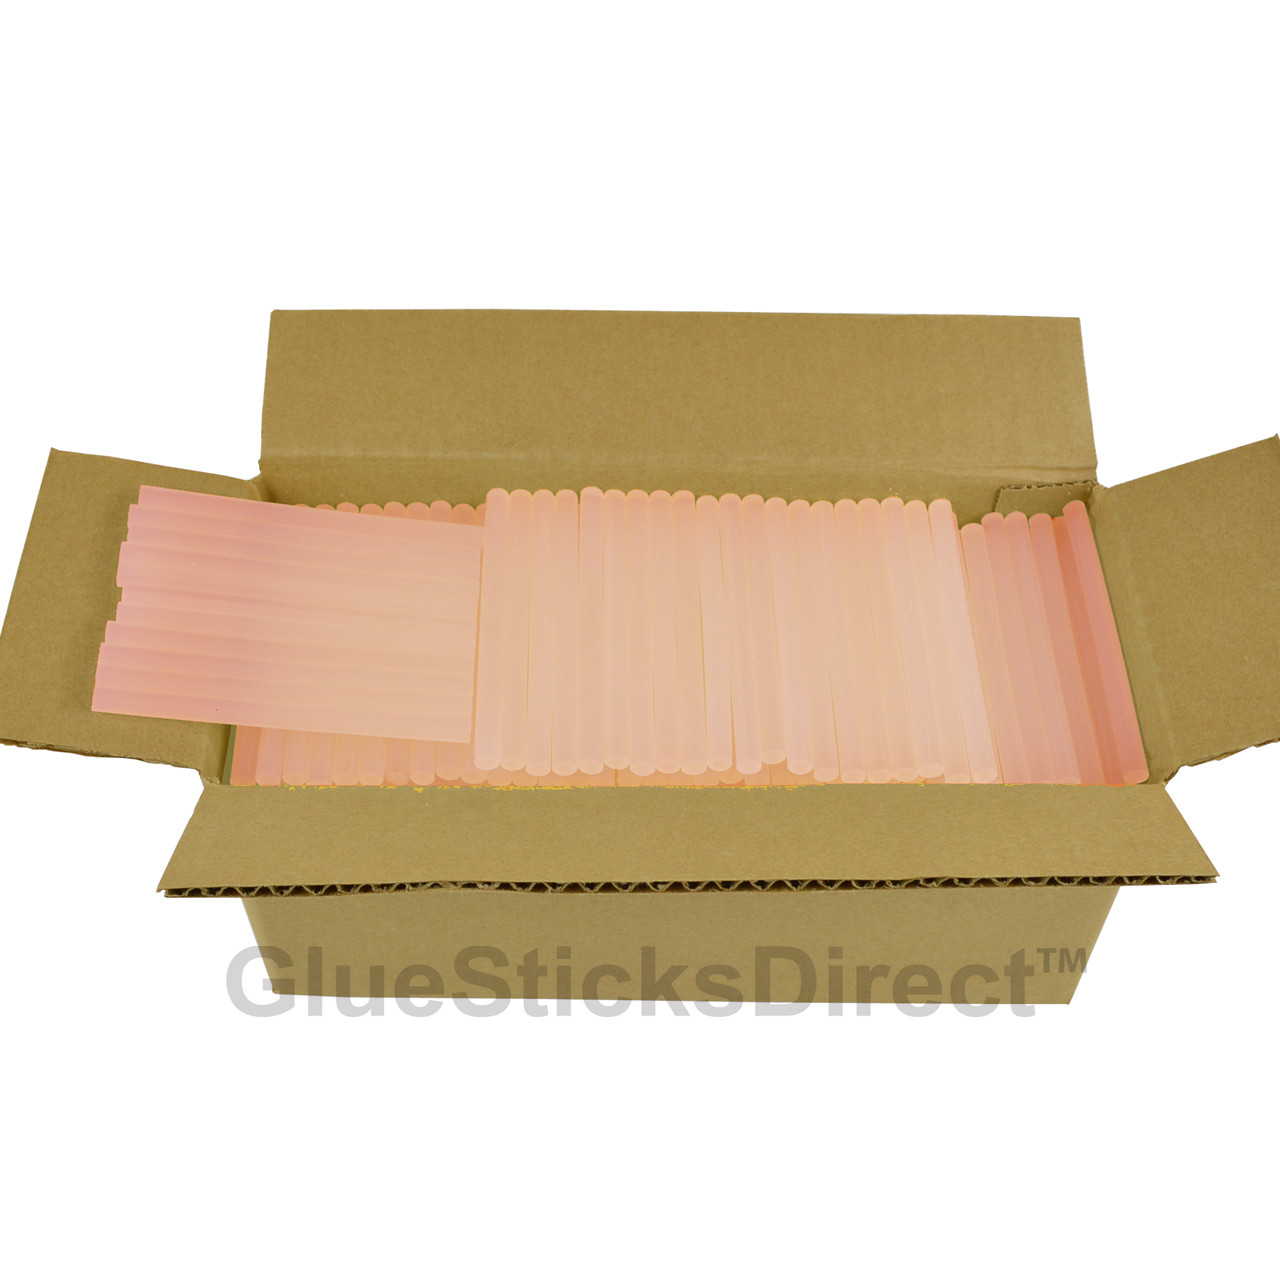 GlueSticksDirect Translucent Pink Colored Glue Sticks mini X 4" 5 lbs